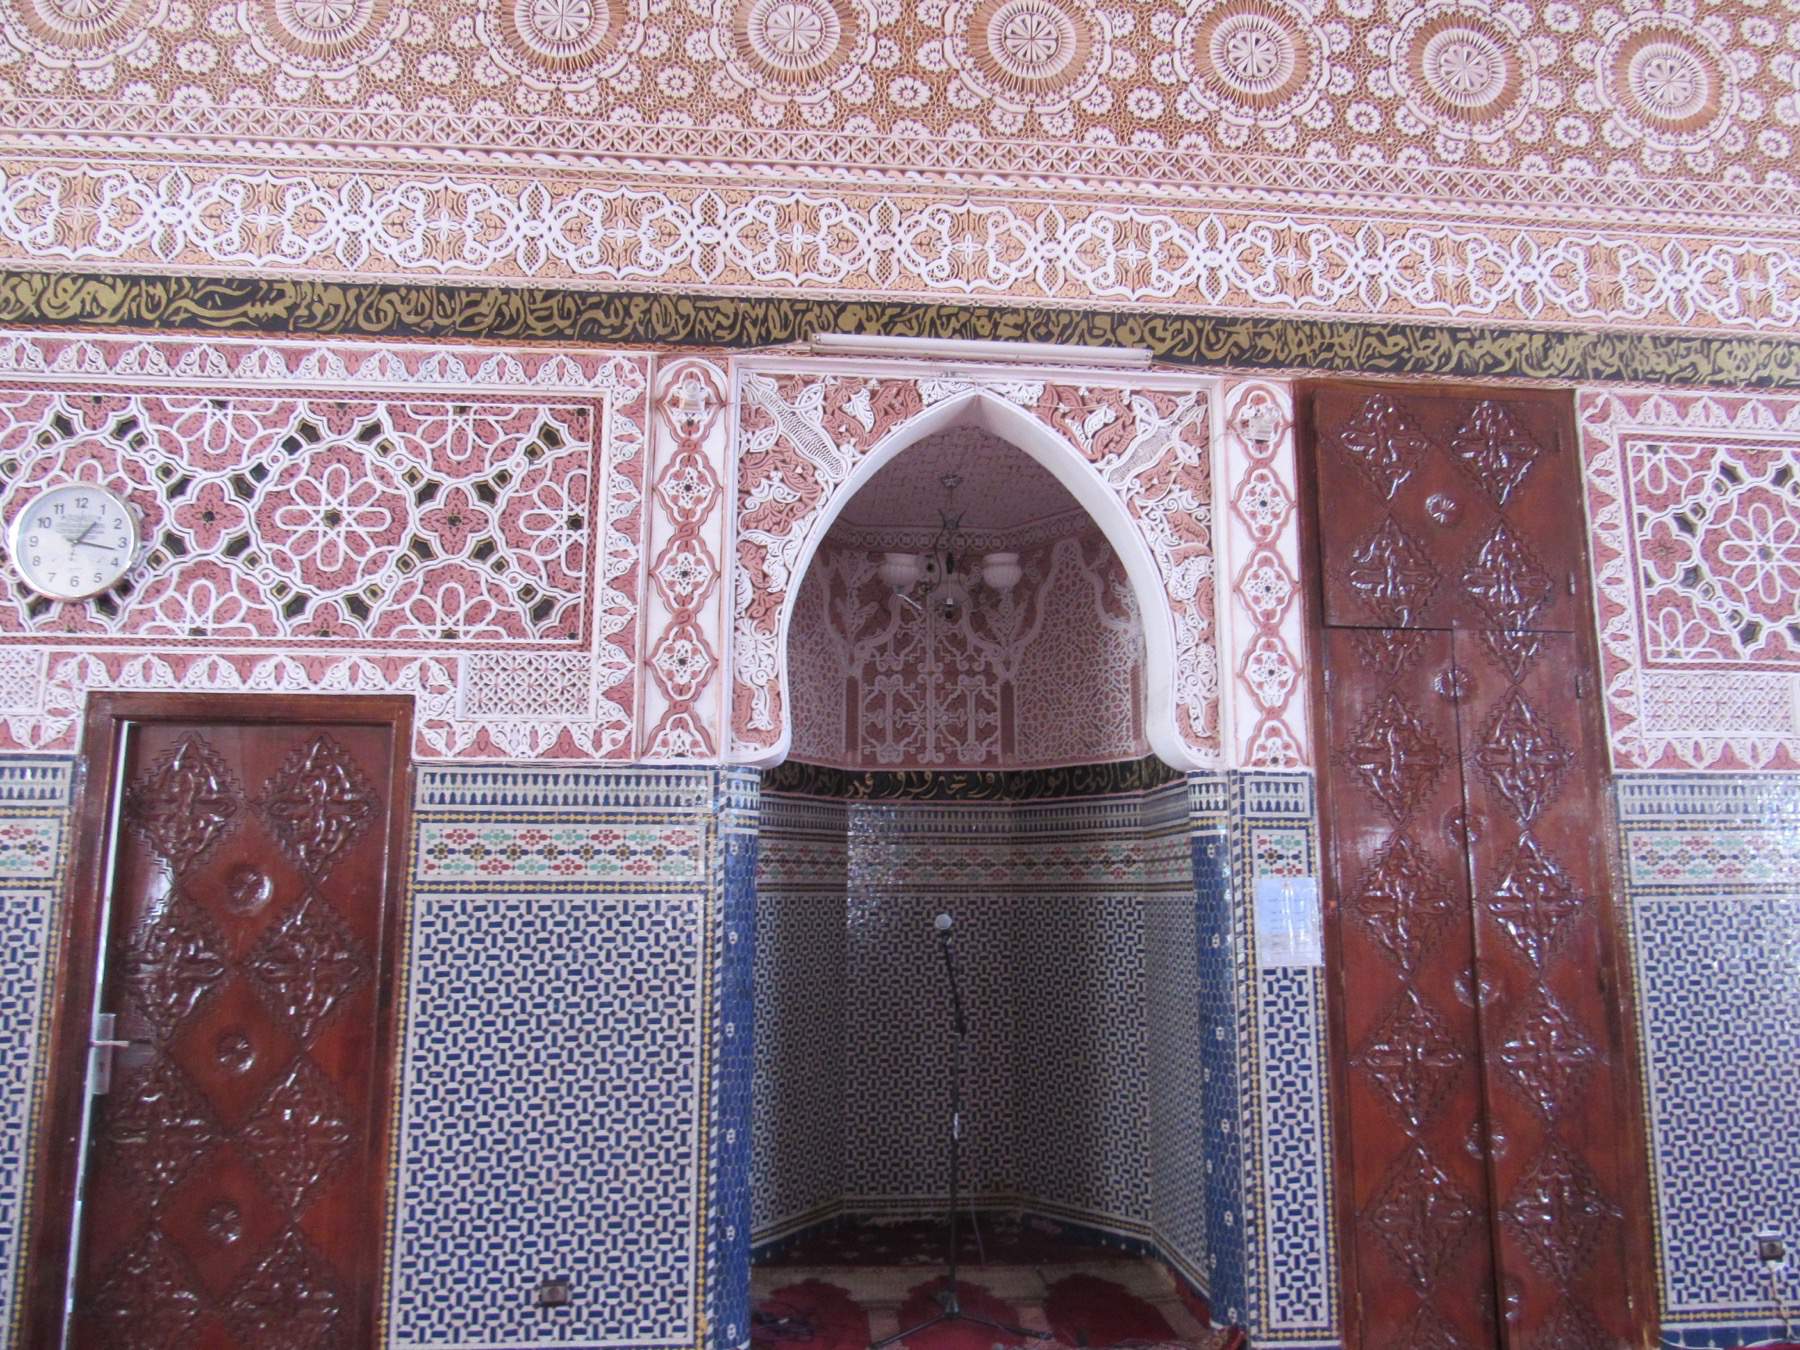 Interior view of Masjid al-Noor with qibla wall.